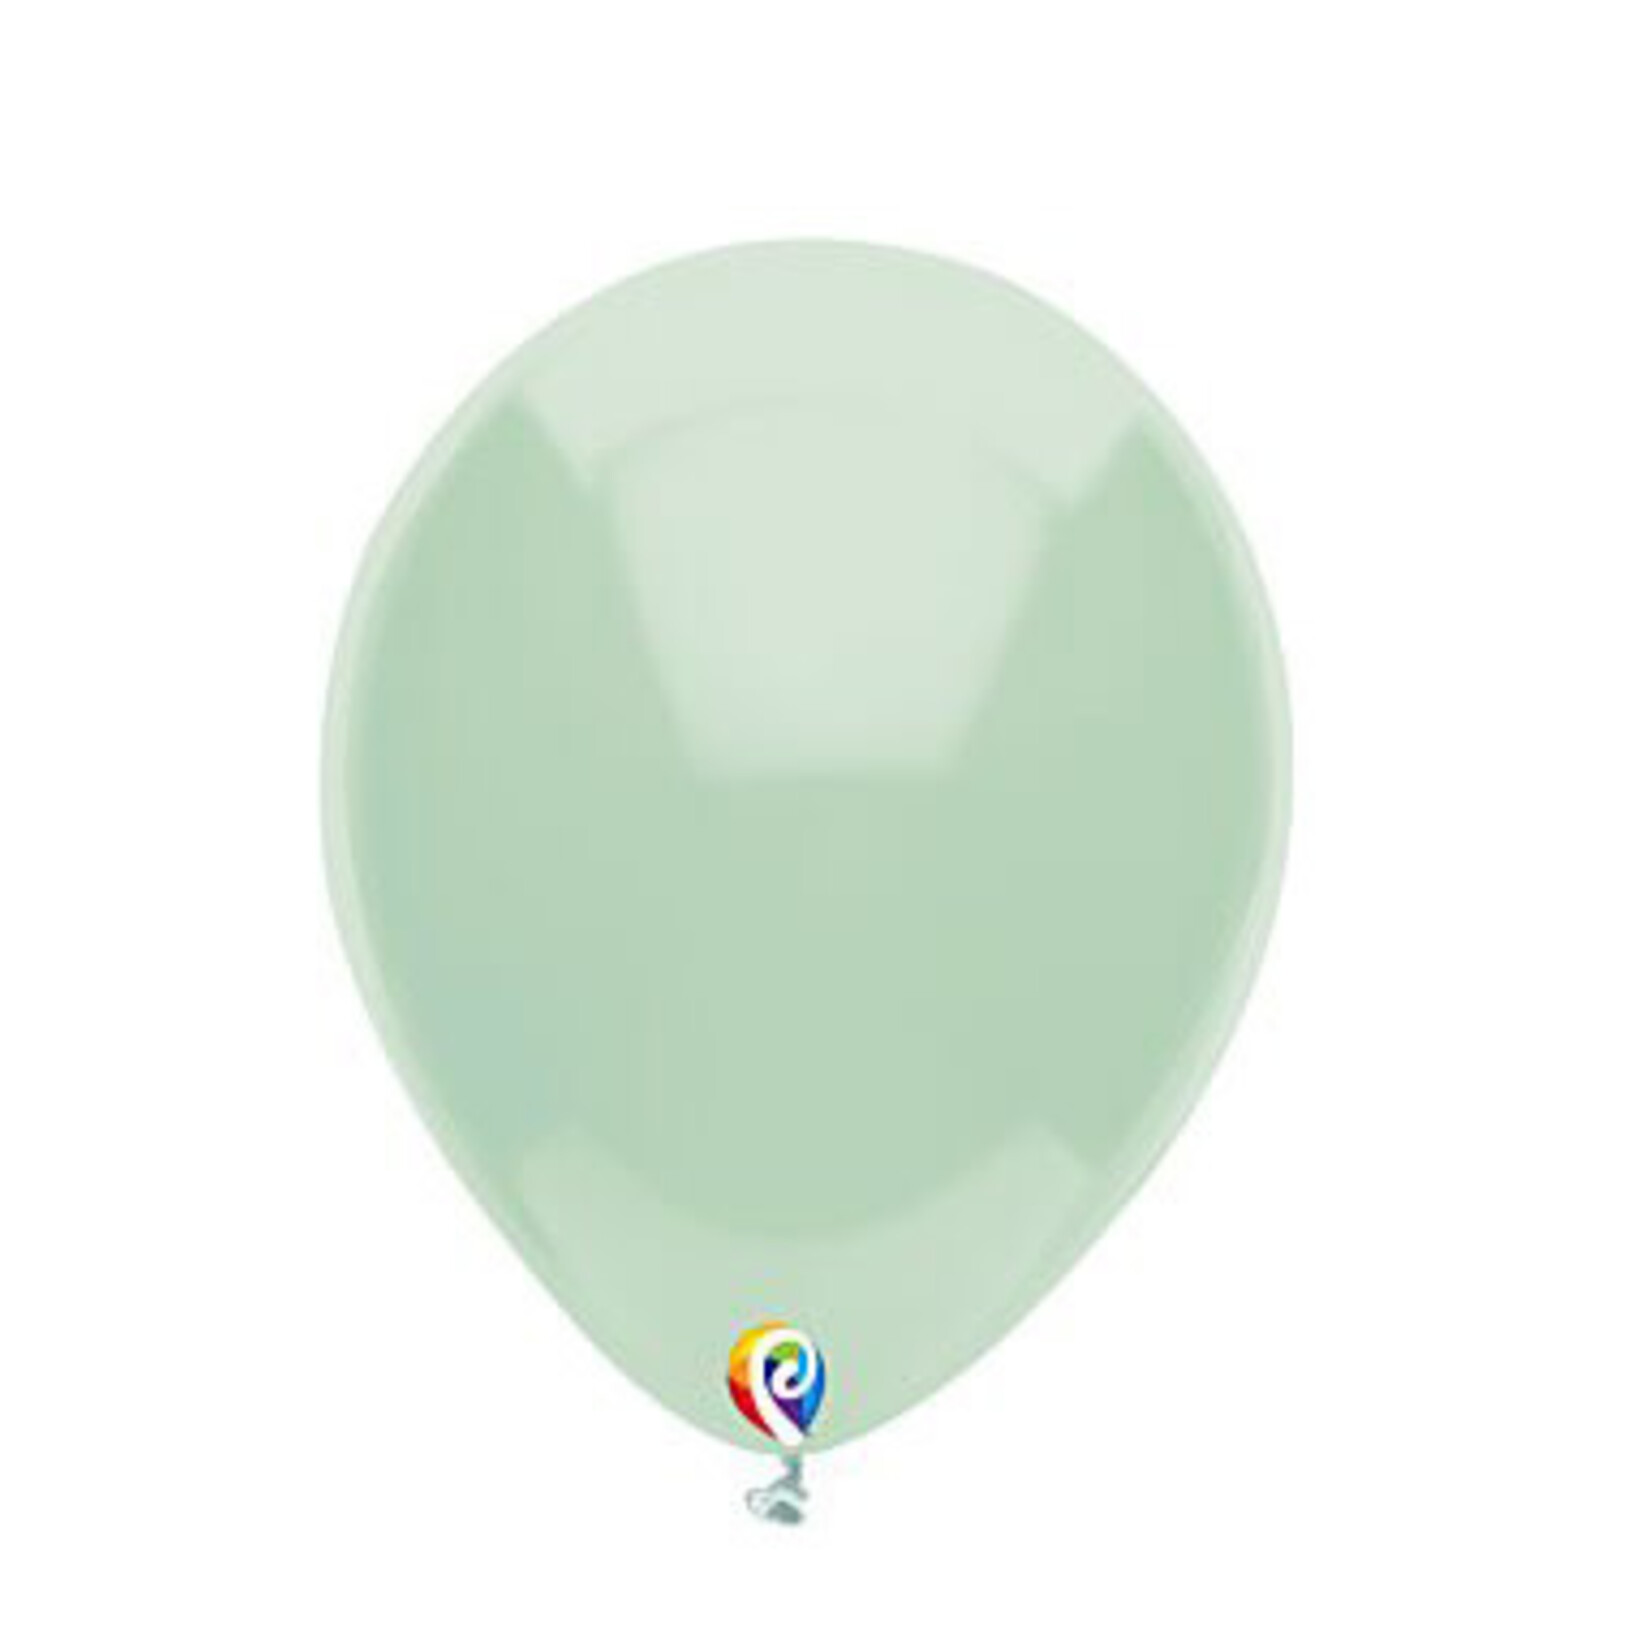 Funsational 12" Mint Green Funsational Latex Balloons - 50ct.